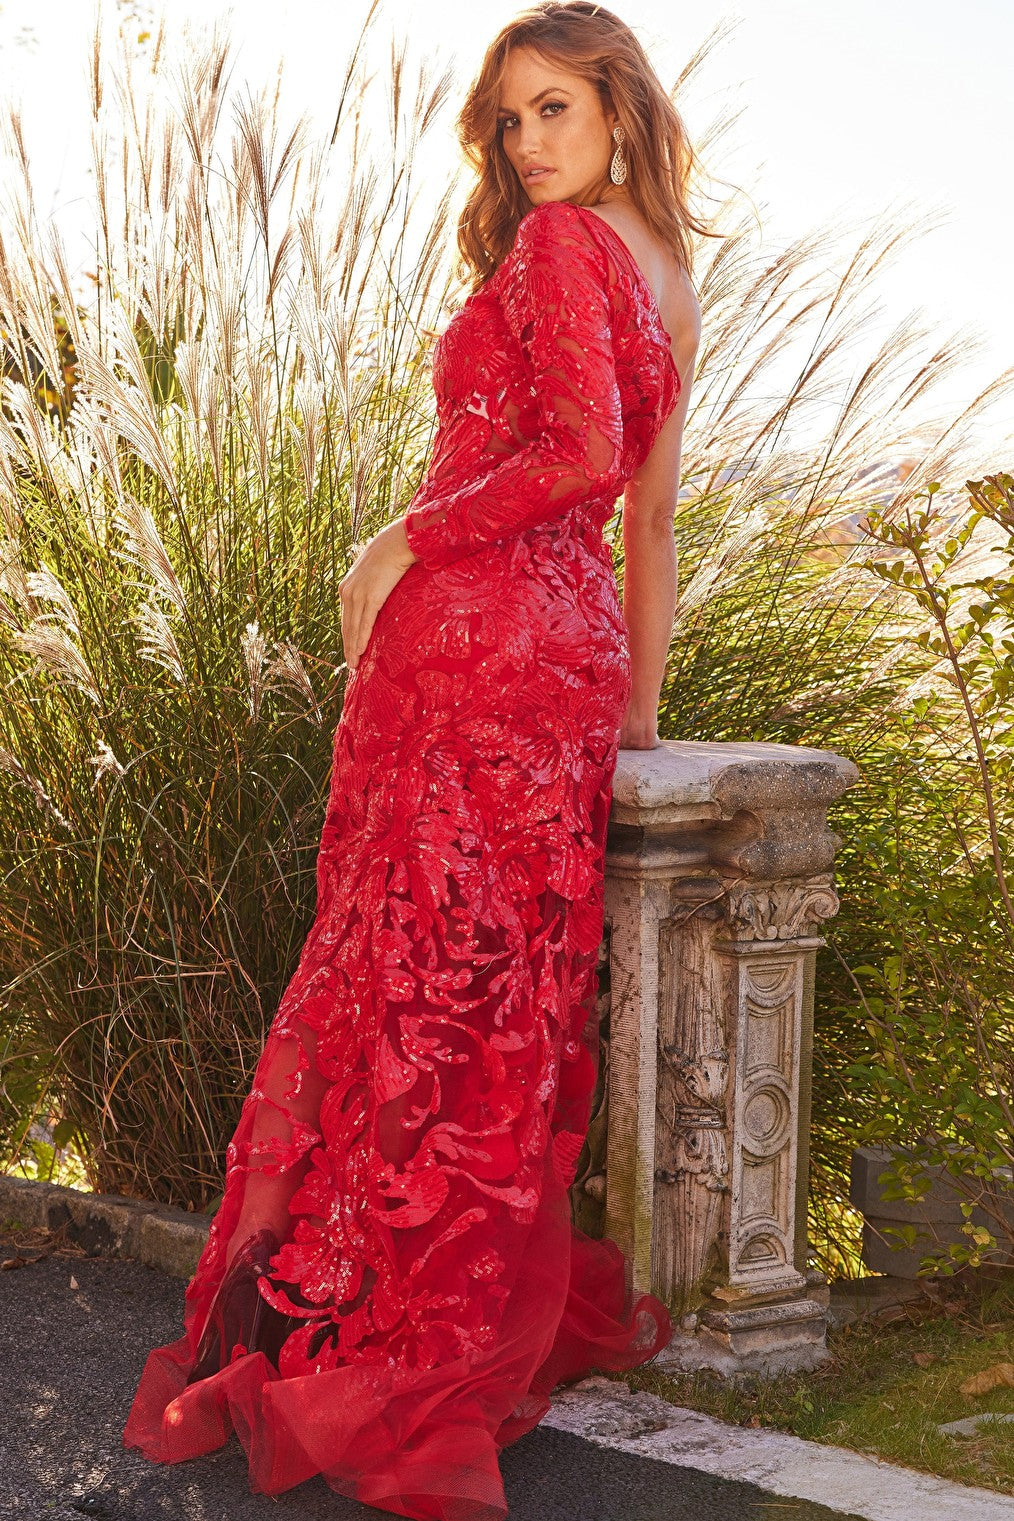 red prom dress 03333